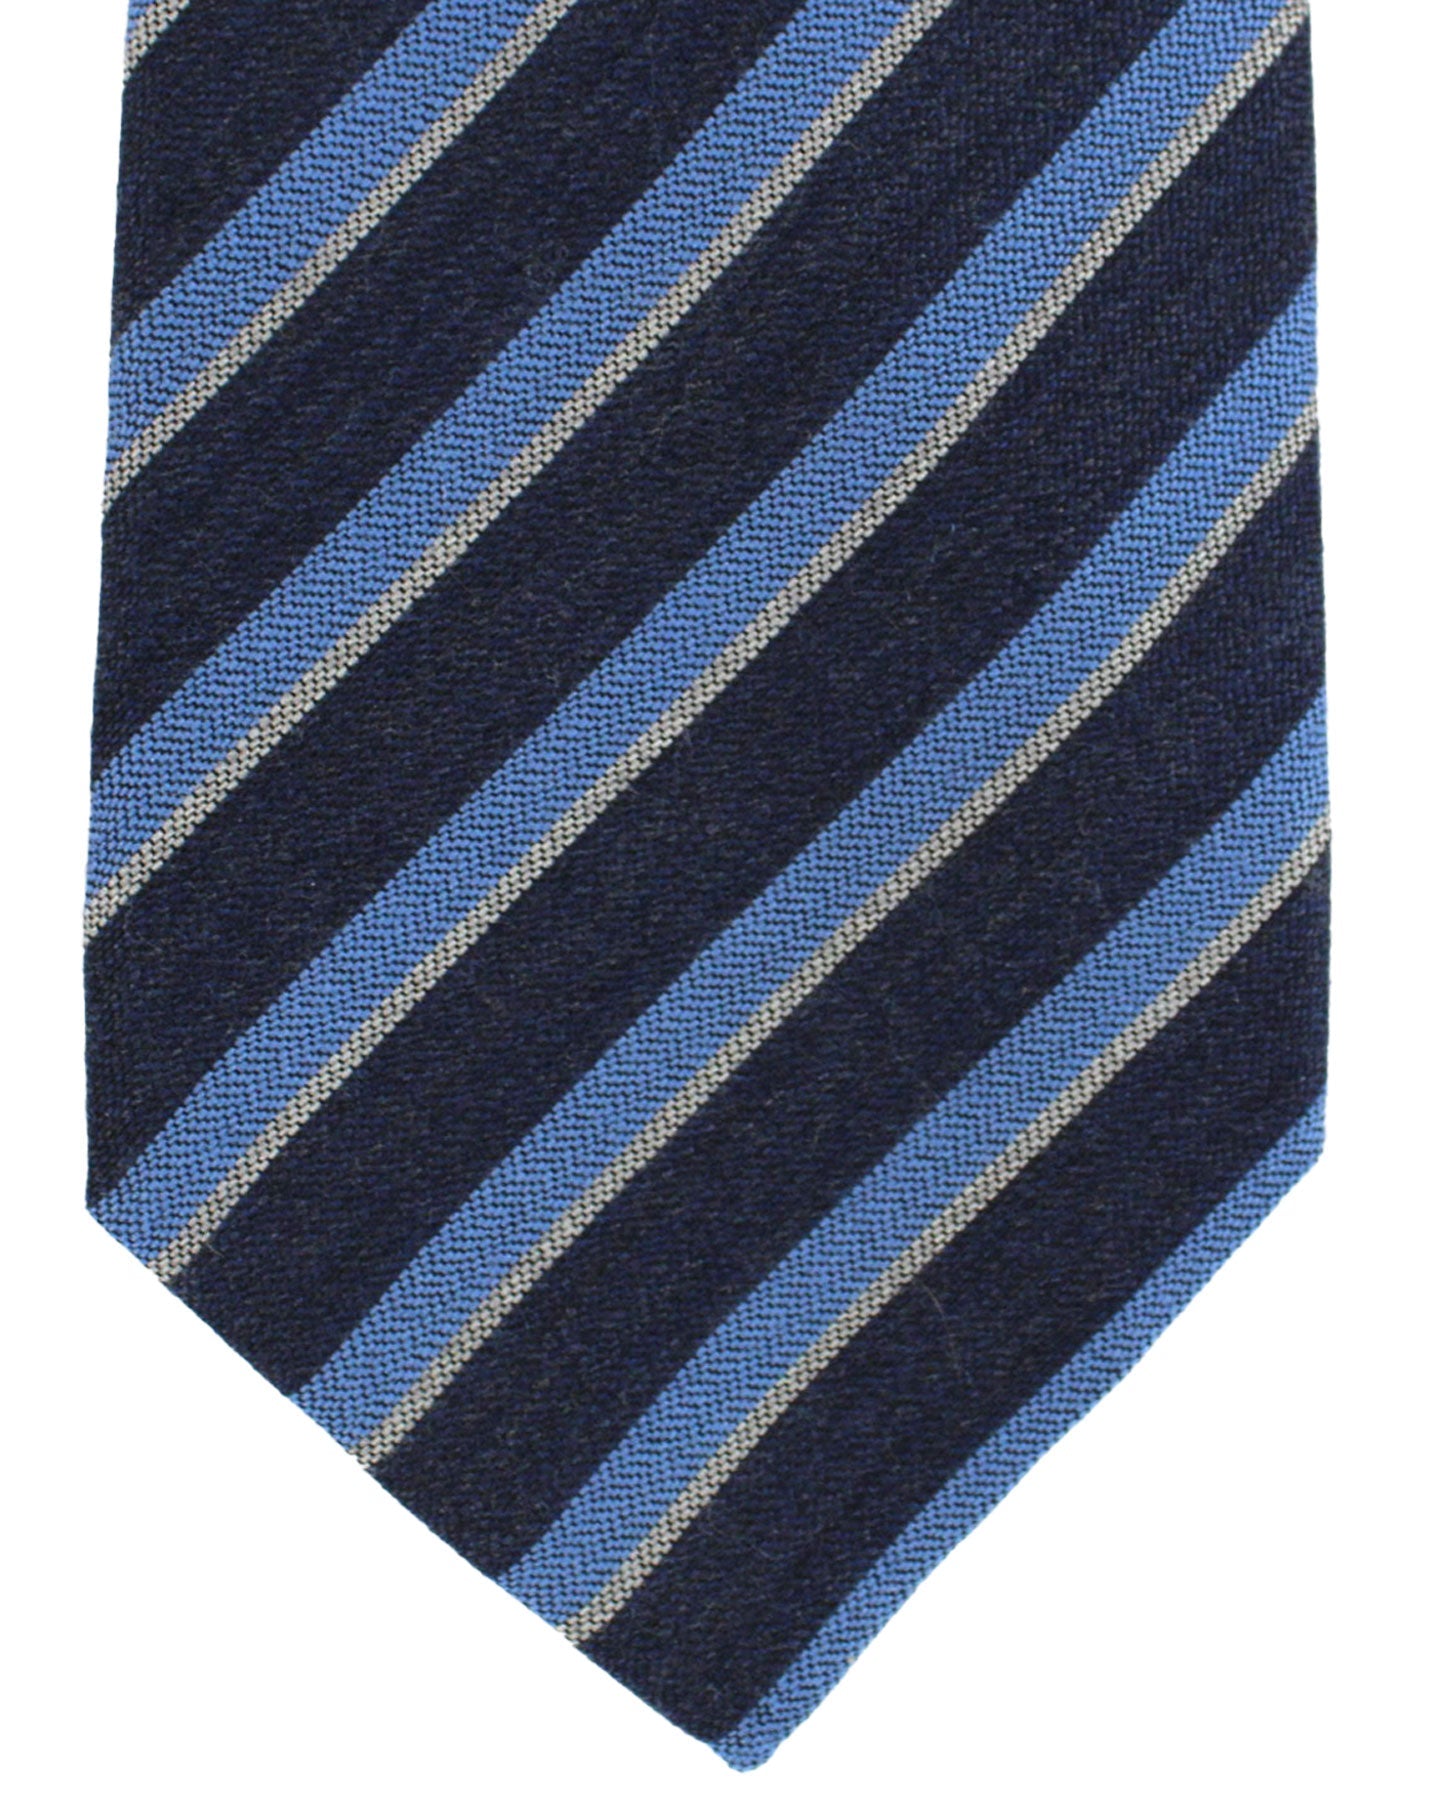 Kiton Sevenfold Tie Navy Blue Stripes - Wool